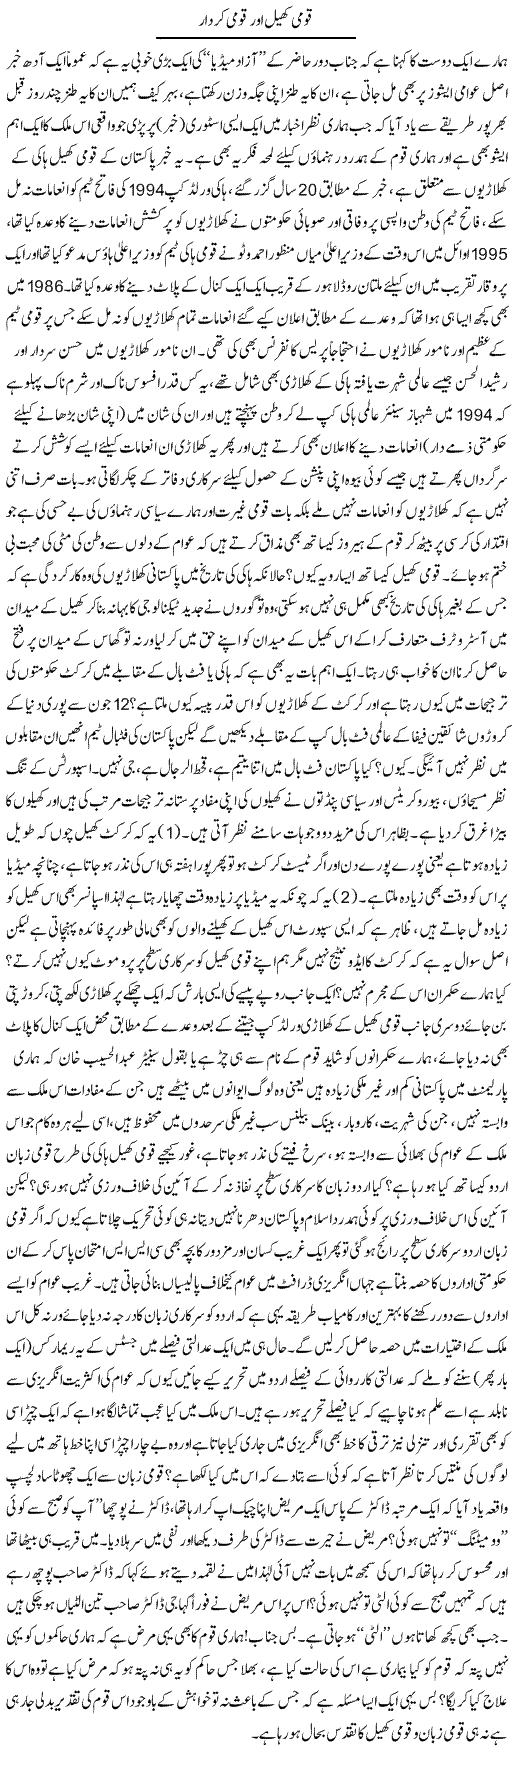 Qoumi Khel Our Qoumi Kirdar | Naveed Iqbal Ansari | Daily Urdu Columns